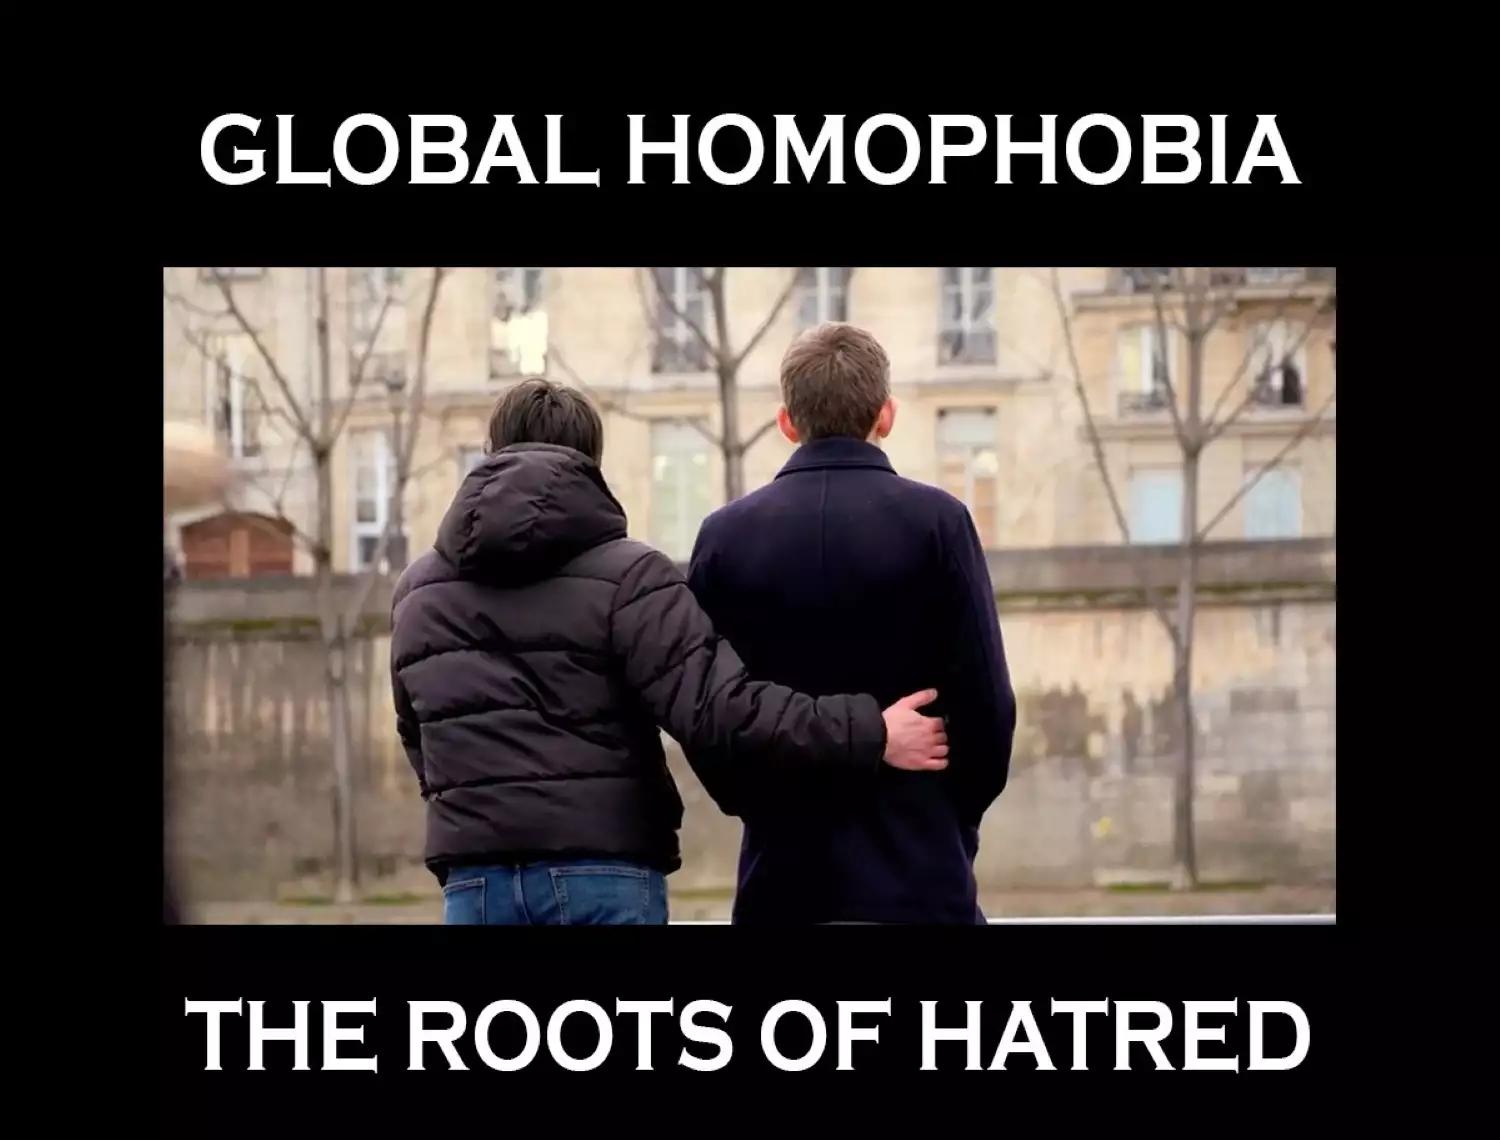 Global homophobia